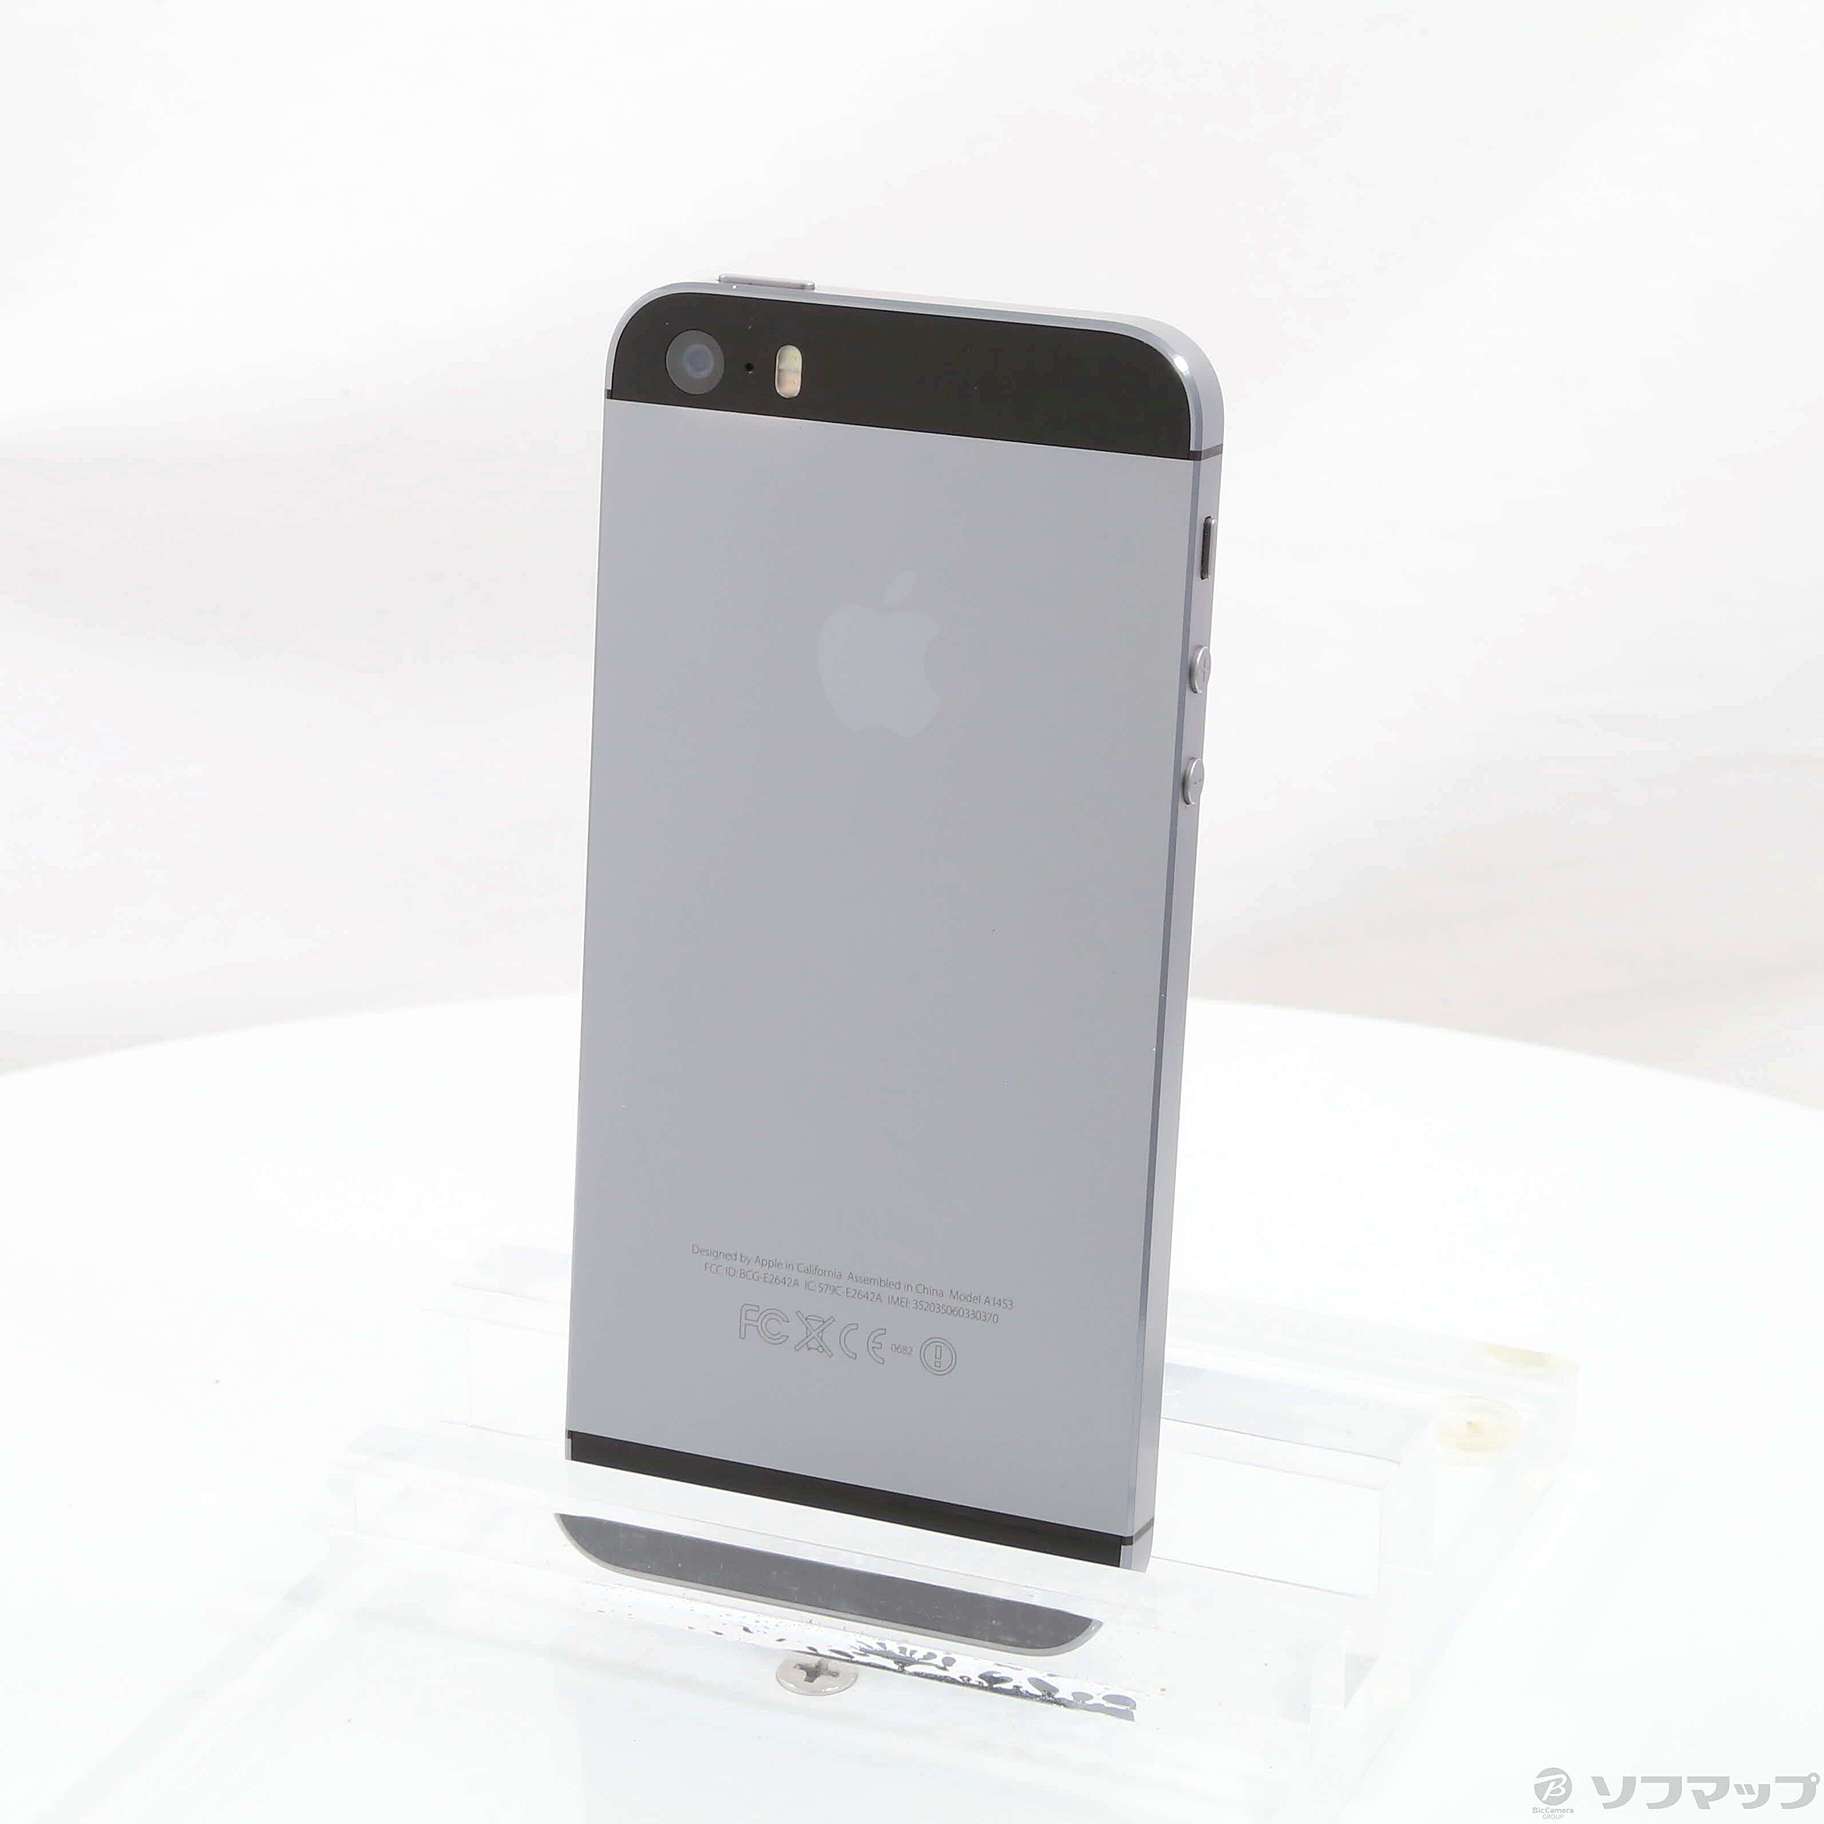 iPhone5s 16gb スペースグレー docomo - スマートフォン本体